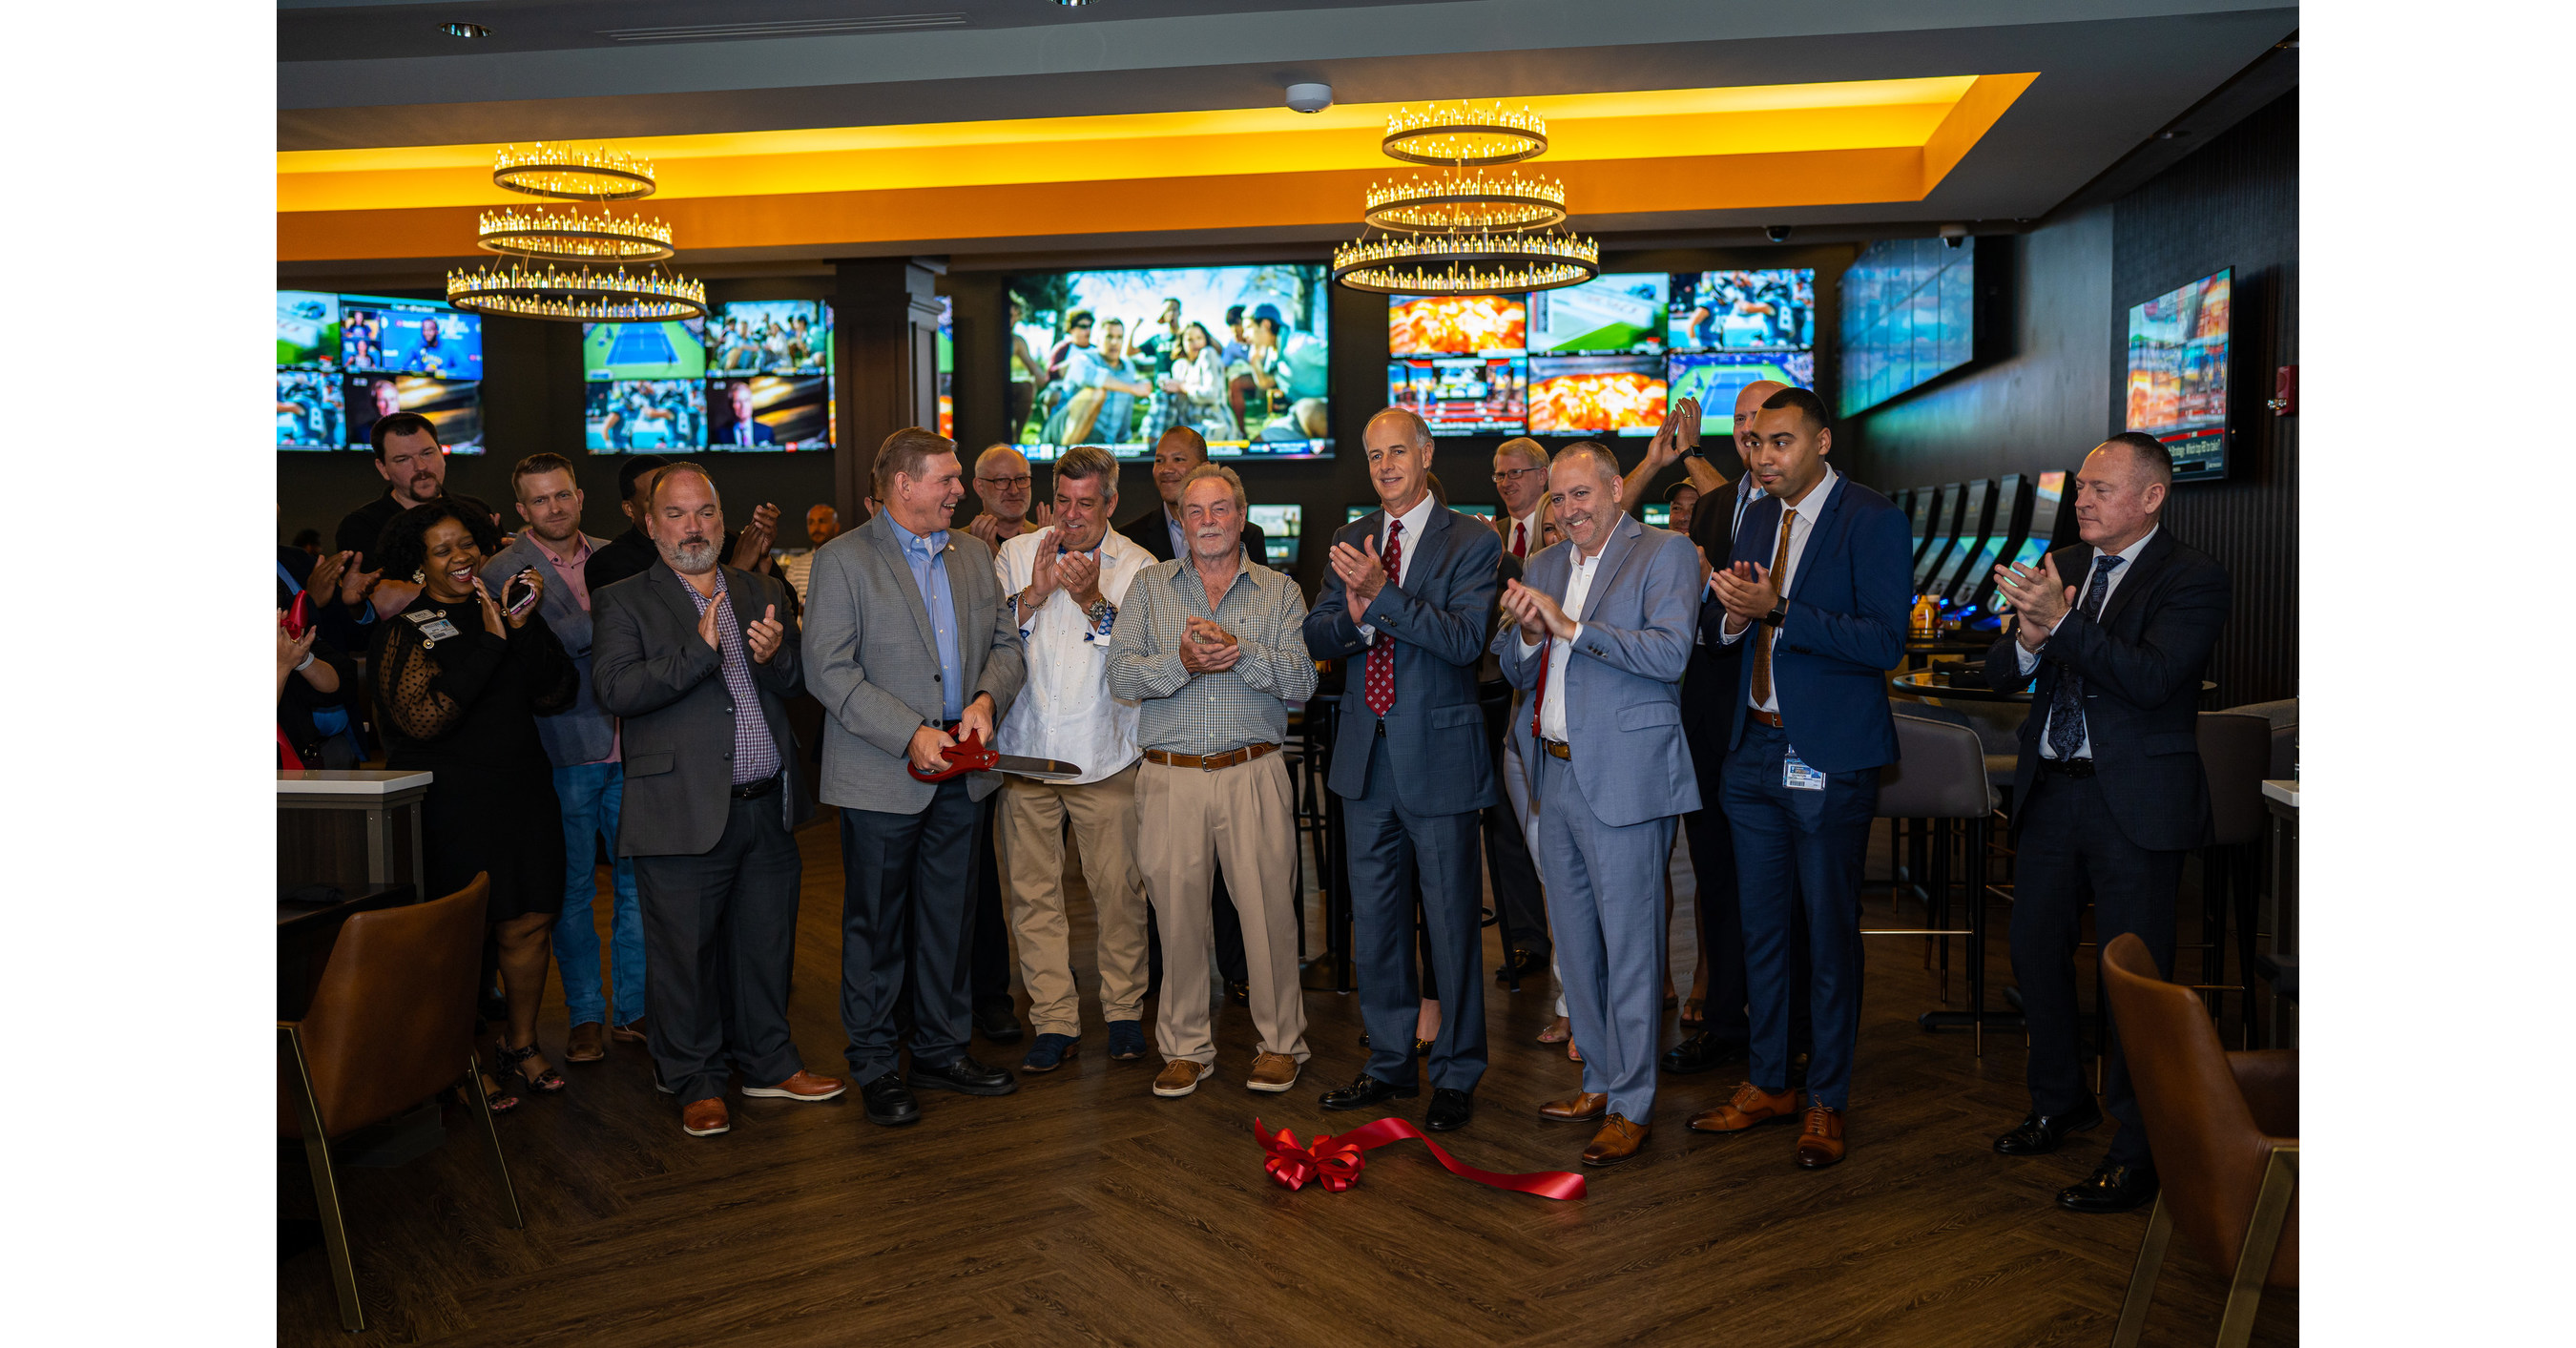 Horseshoe Casino Lake Charles officially opens Monday